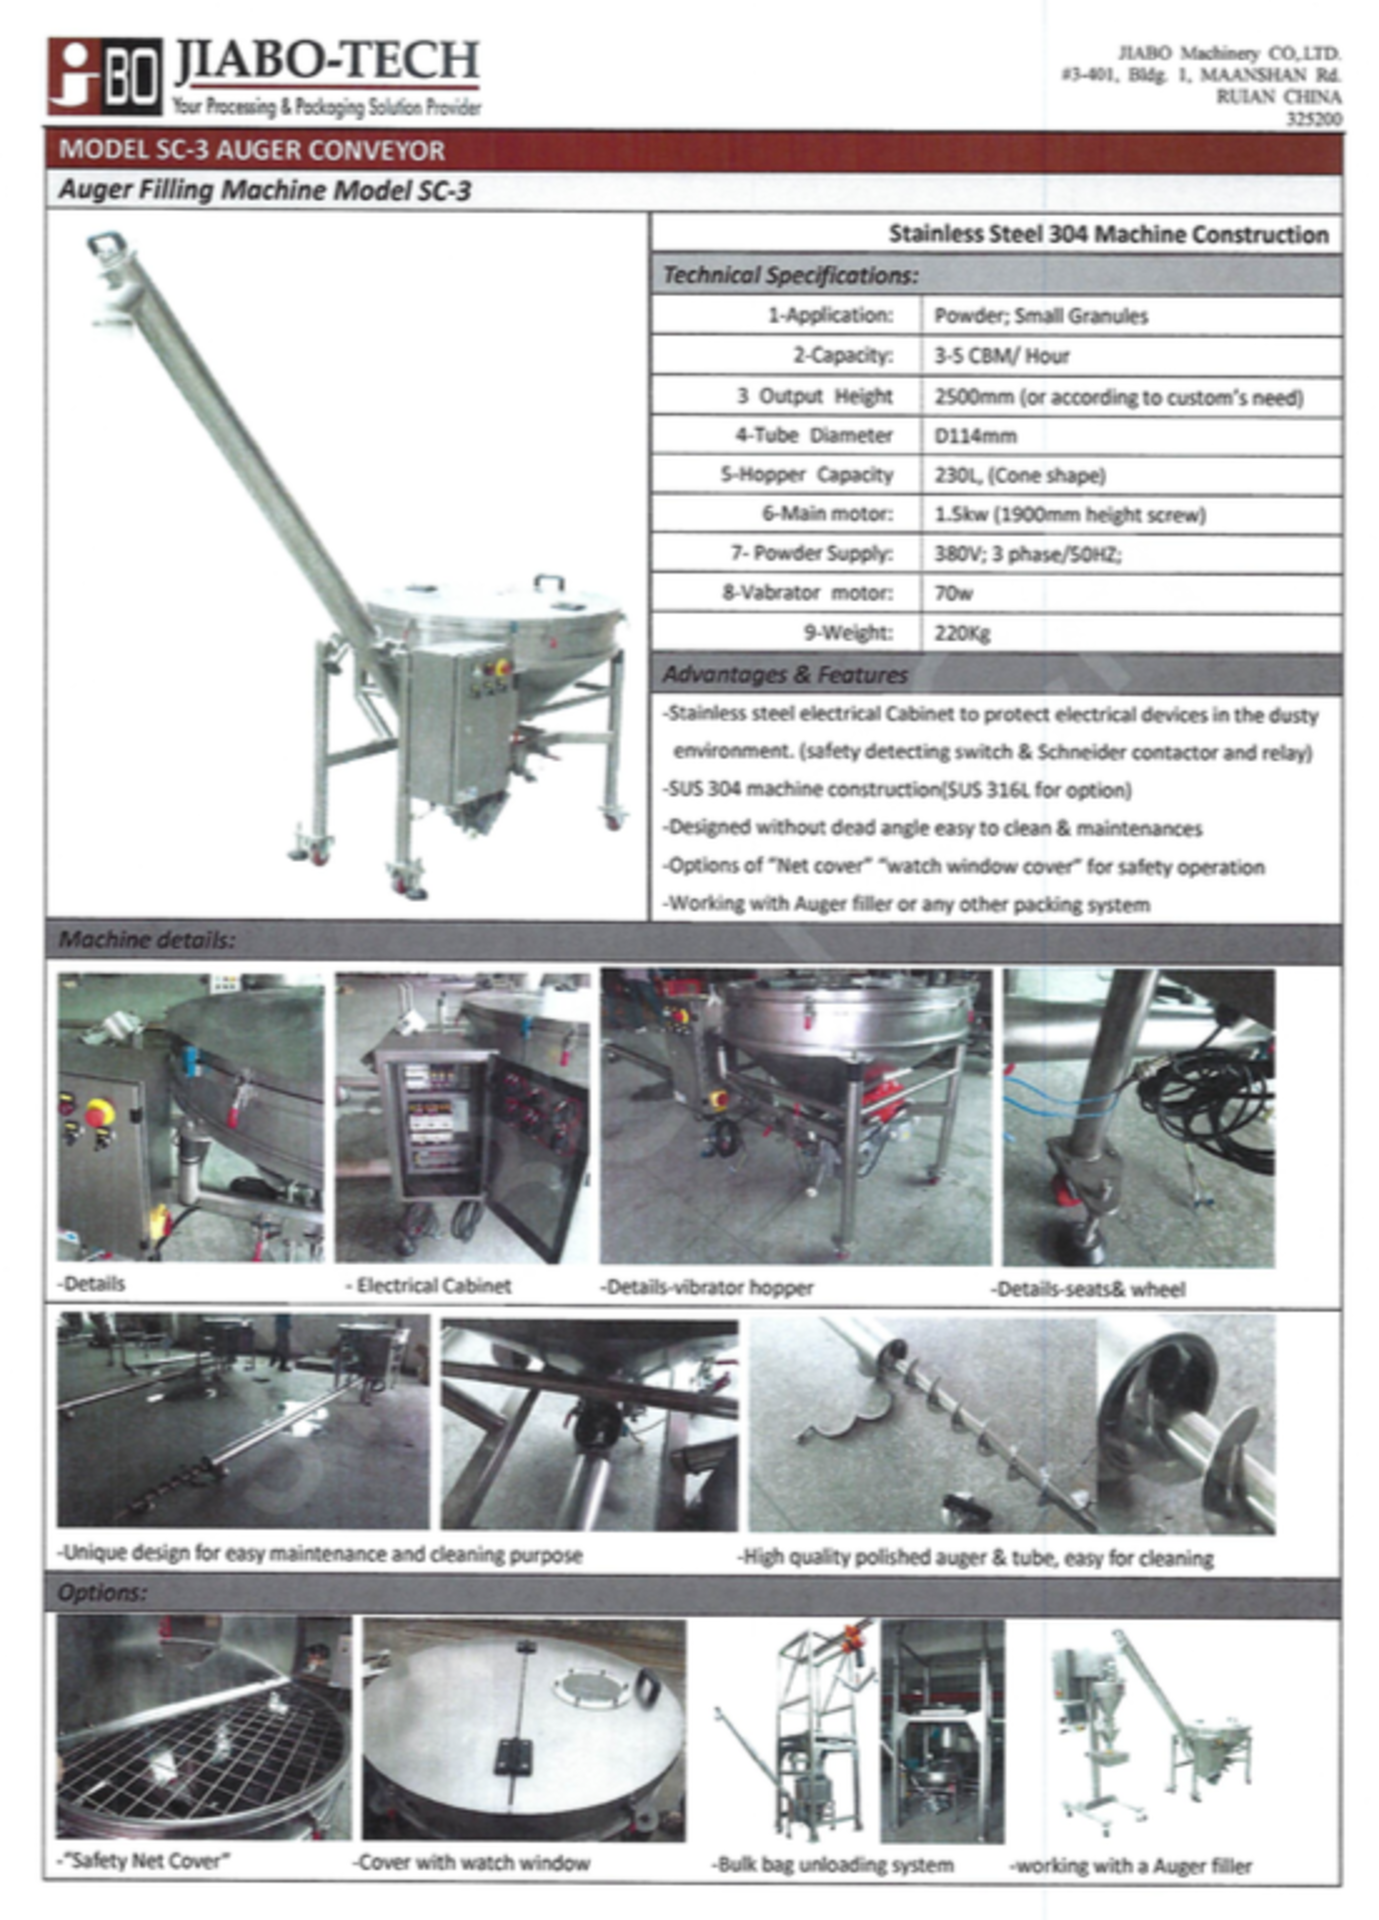 JIABO-TECH Auger Filling Machine, Model# SC-3 - Image 3 of 4